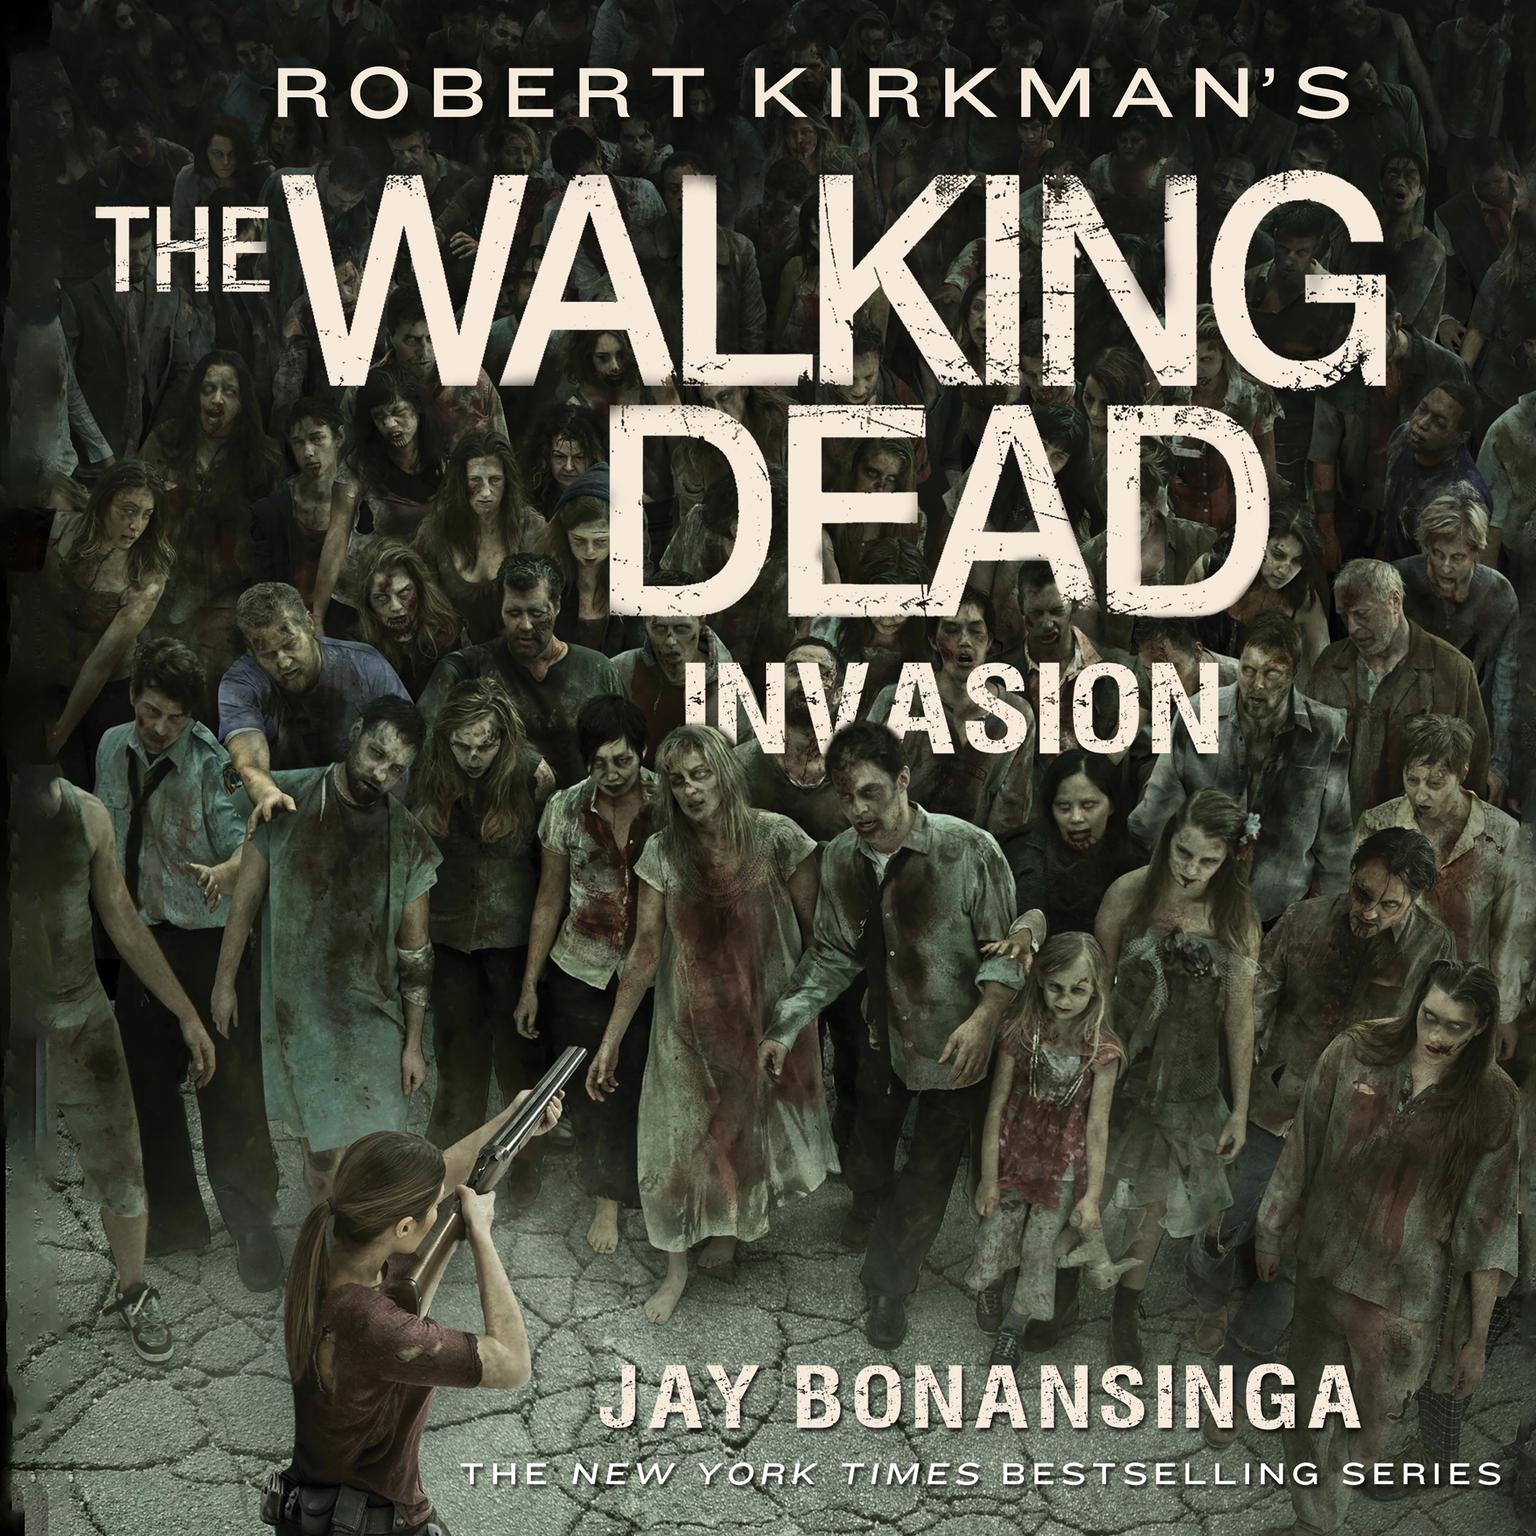 Robert Kirkmans The Walking Dead: Invasion Audiobook, by Jay Bonansinga